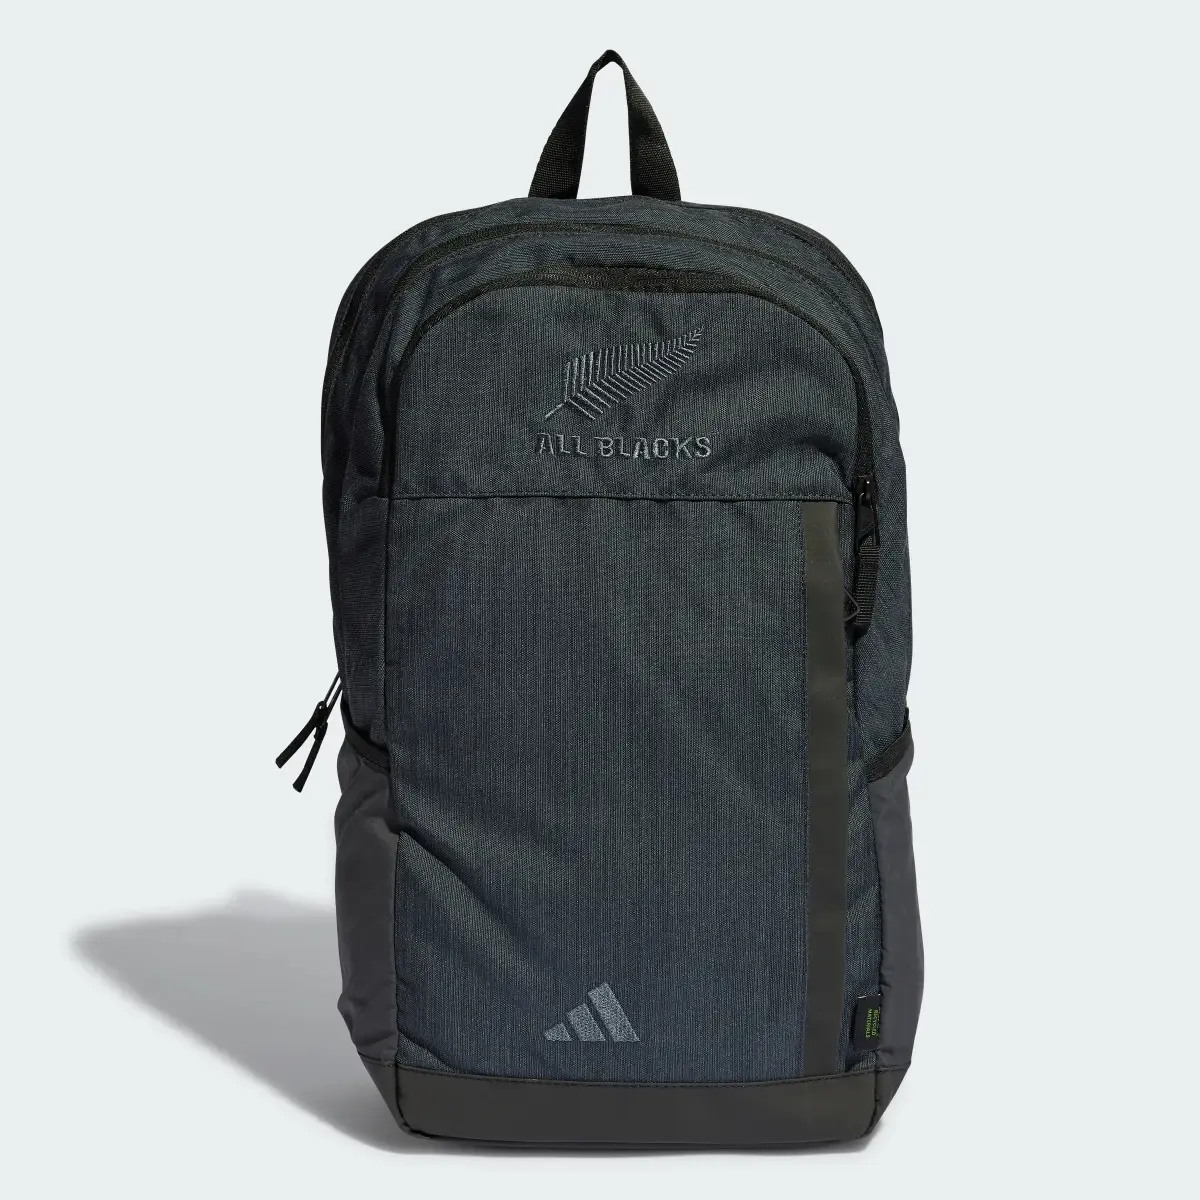 Adidas All Blacks Backpack. 1